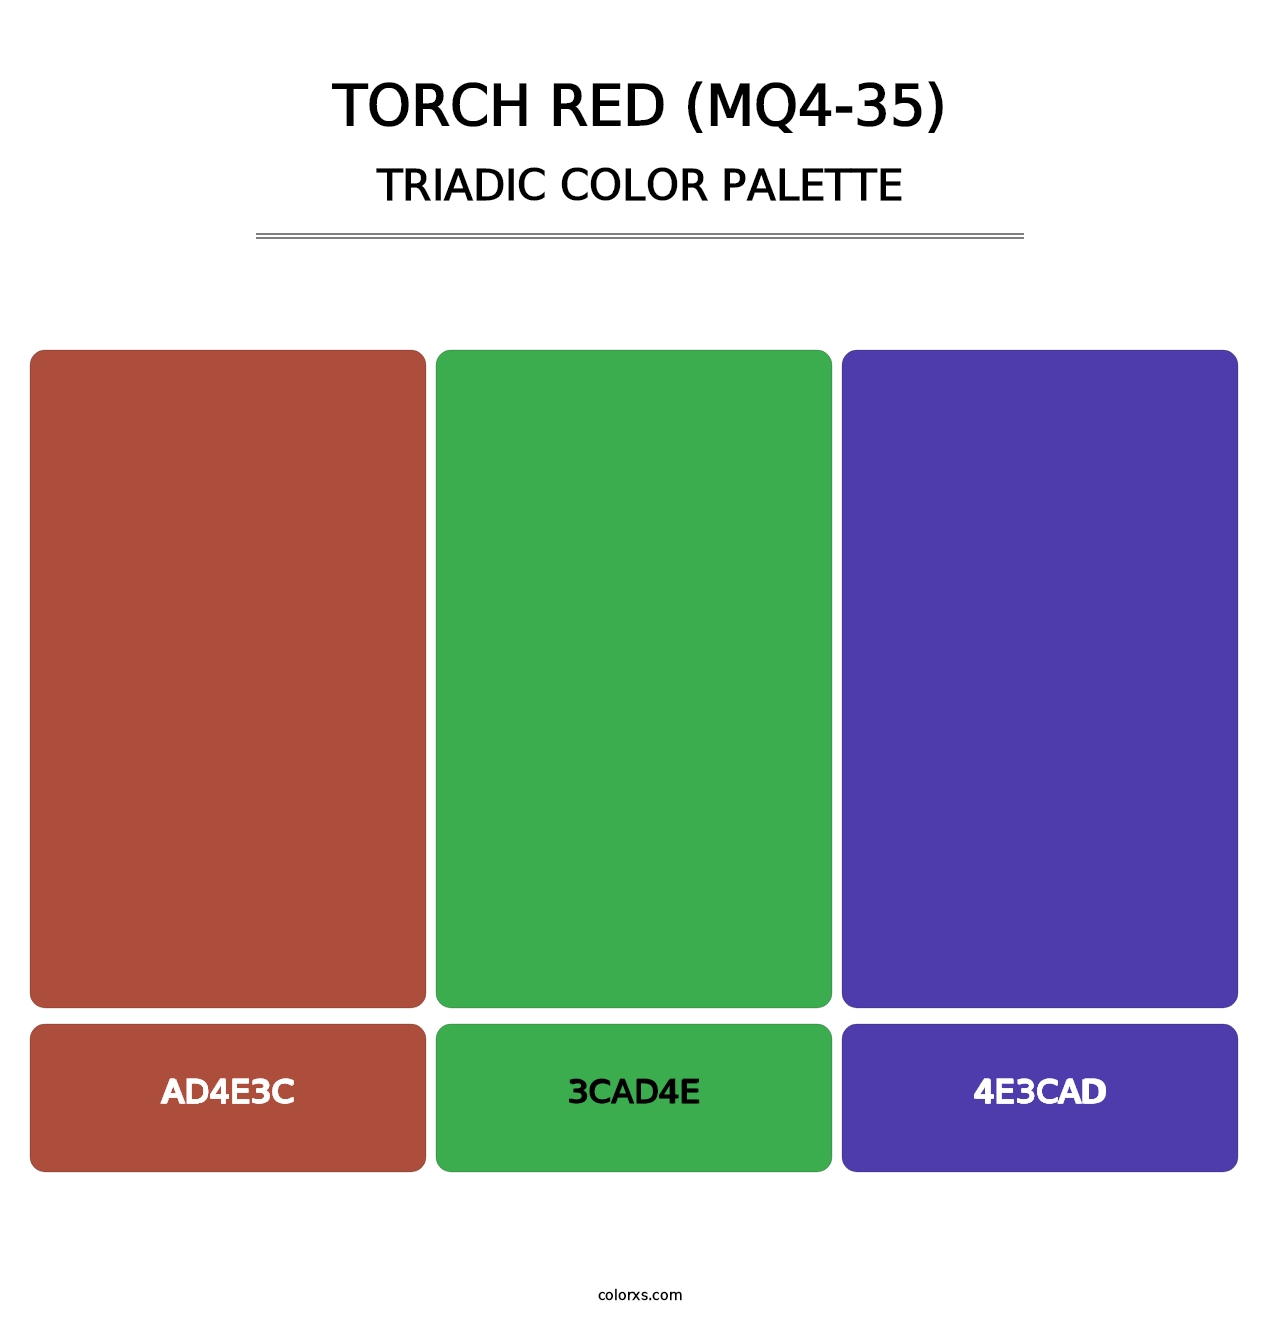 Torch Red (MQ4-35) - Triadic Color Palette